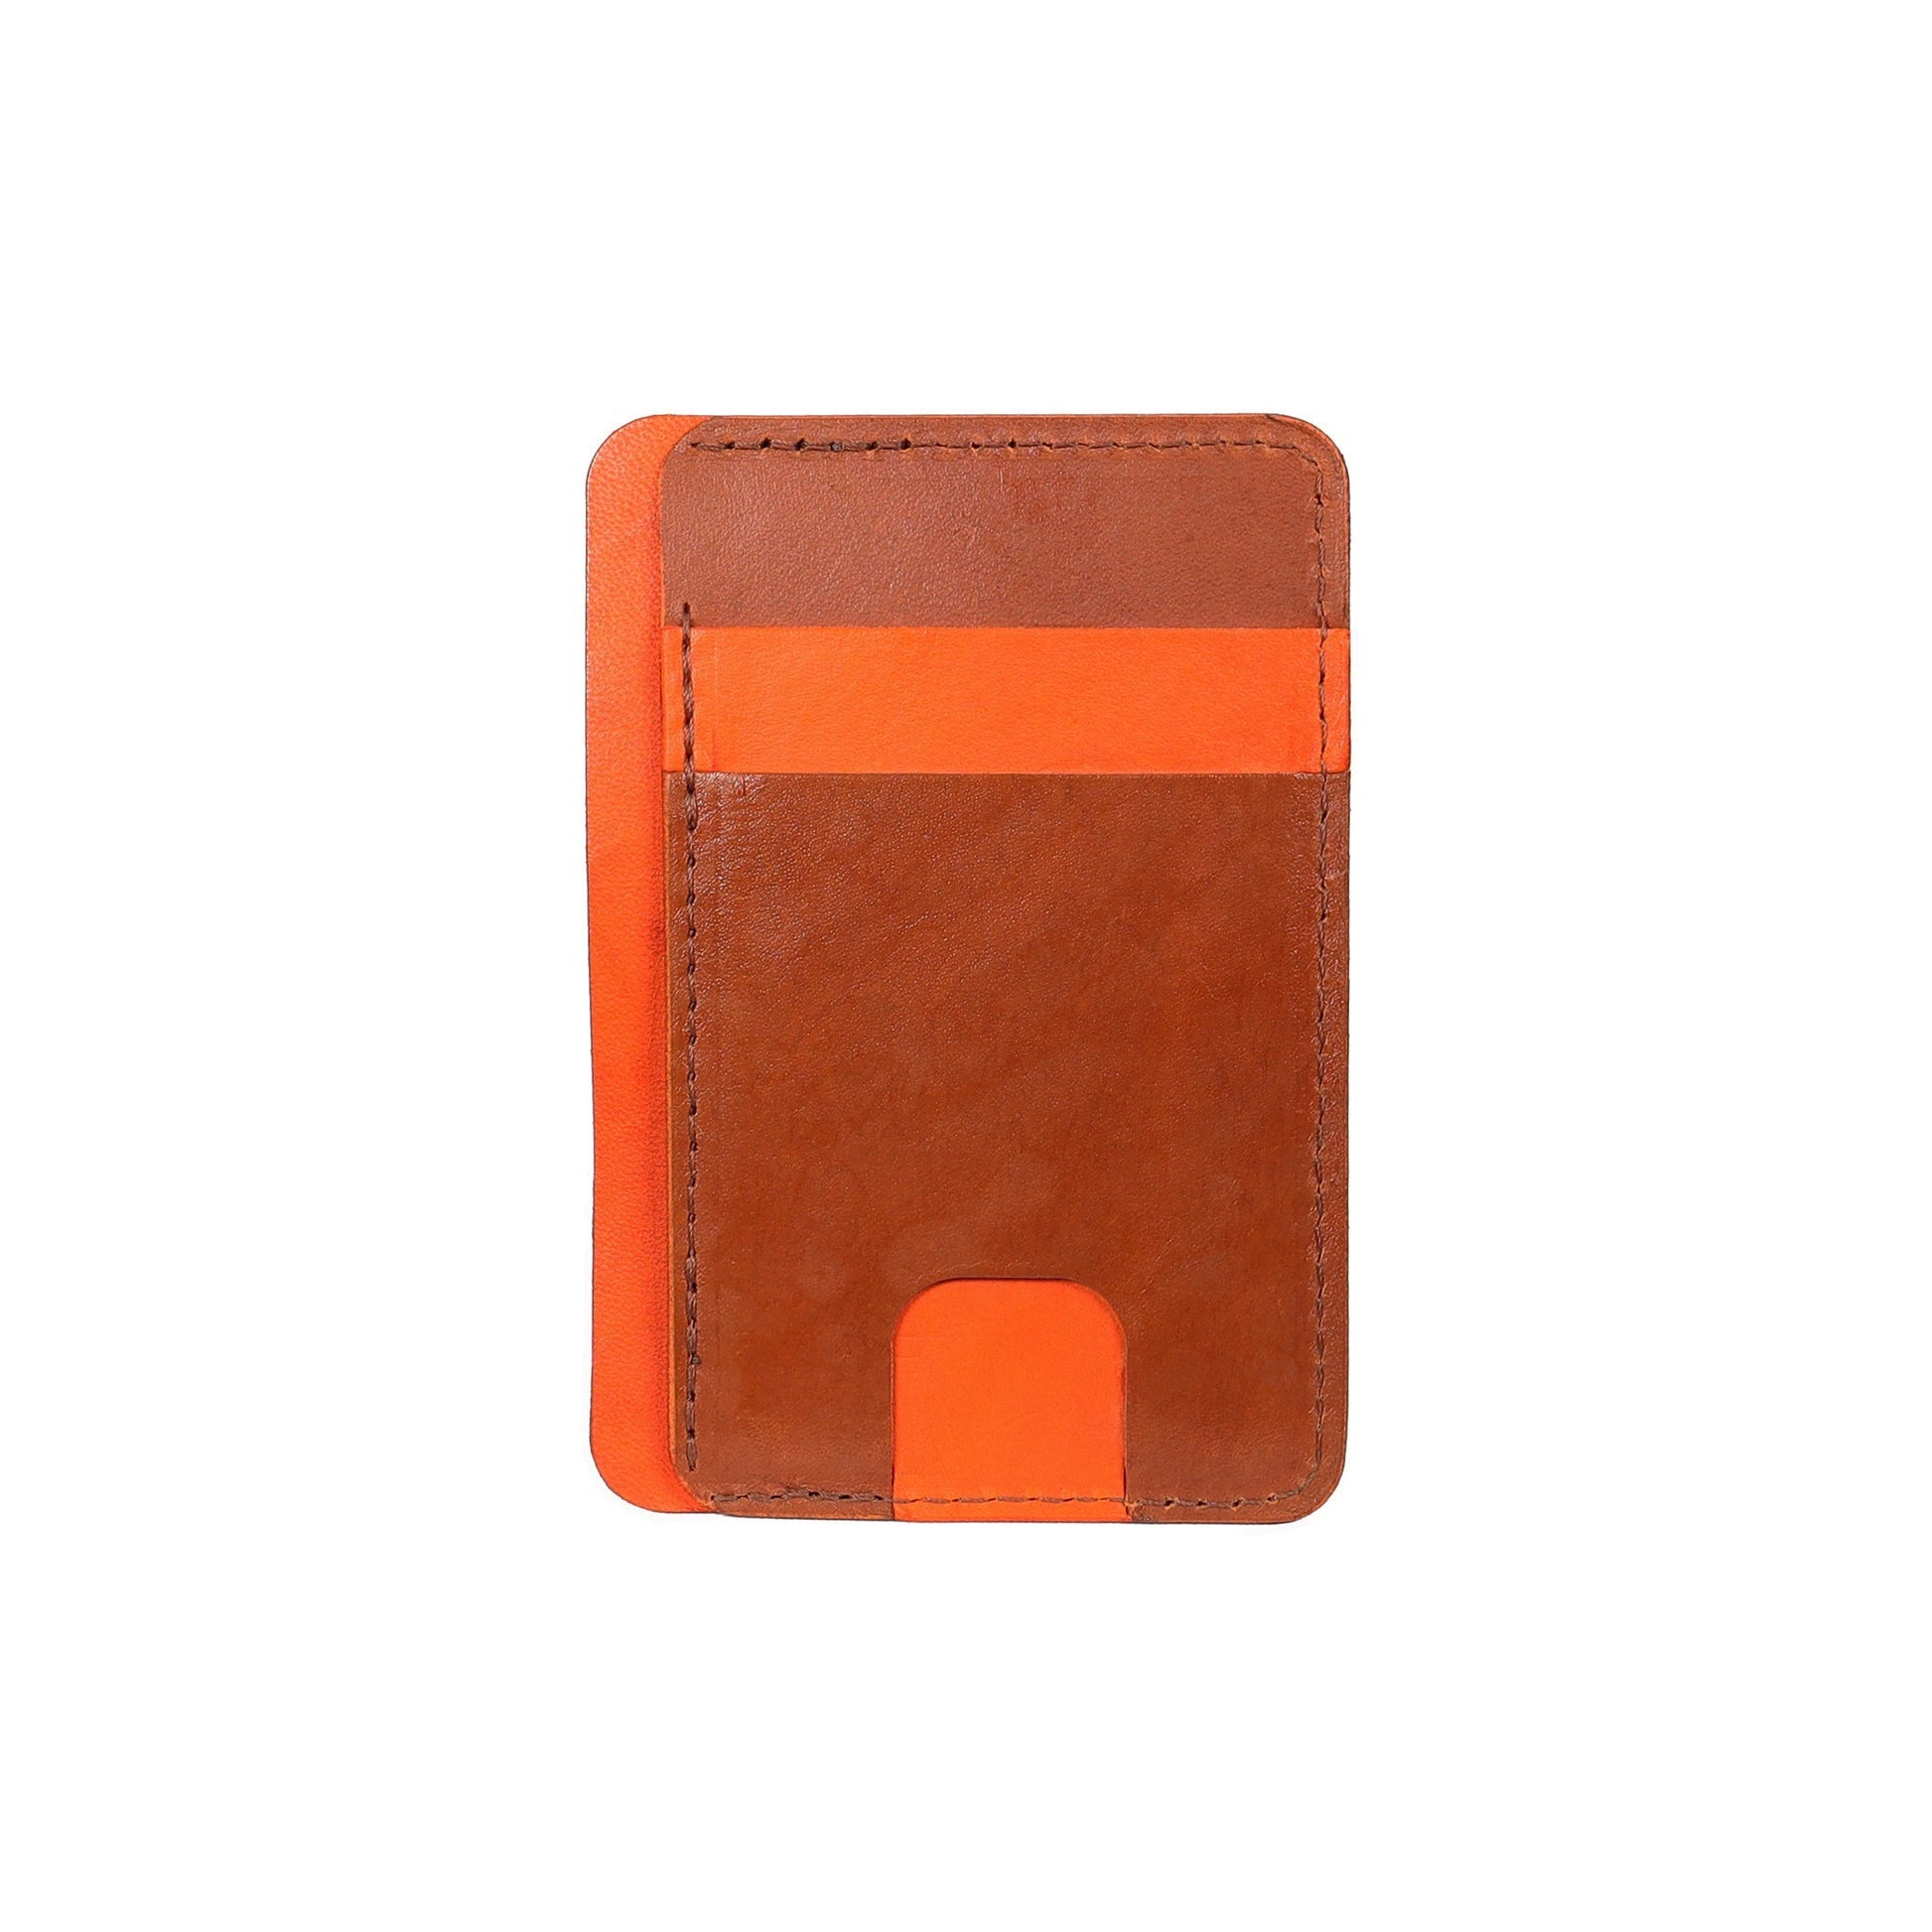 Orange and Brown Leather Front Pocket Wallet